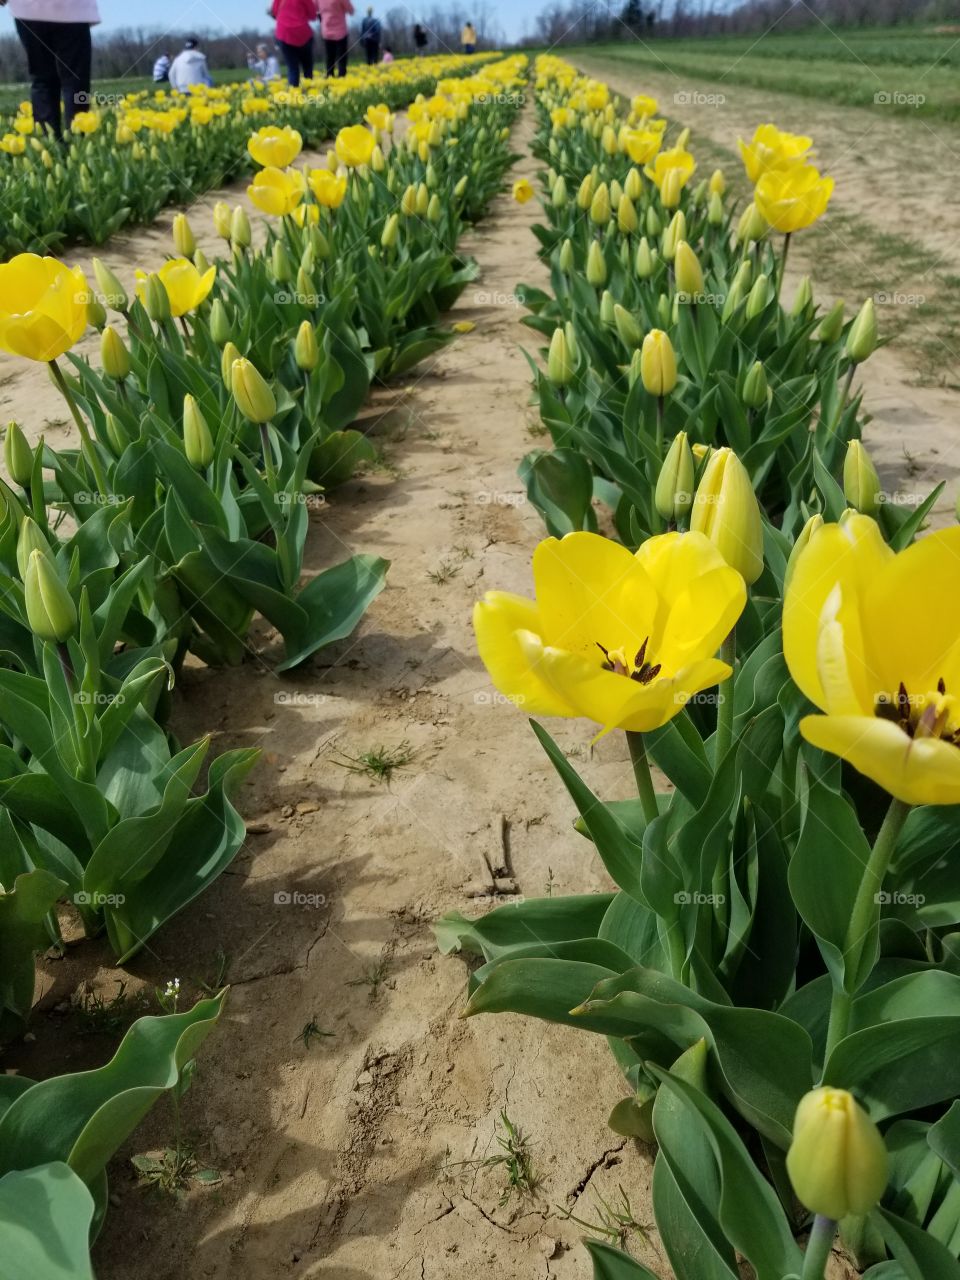 Tulips Festival, NJ